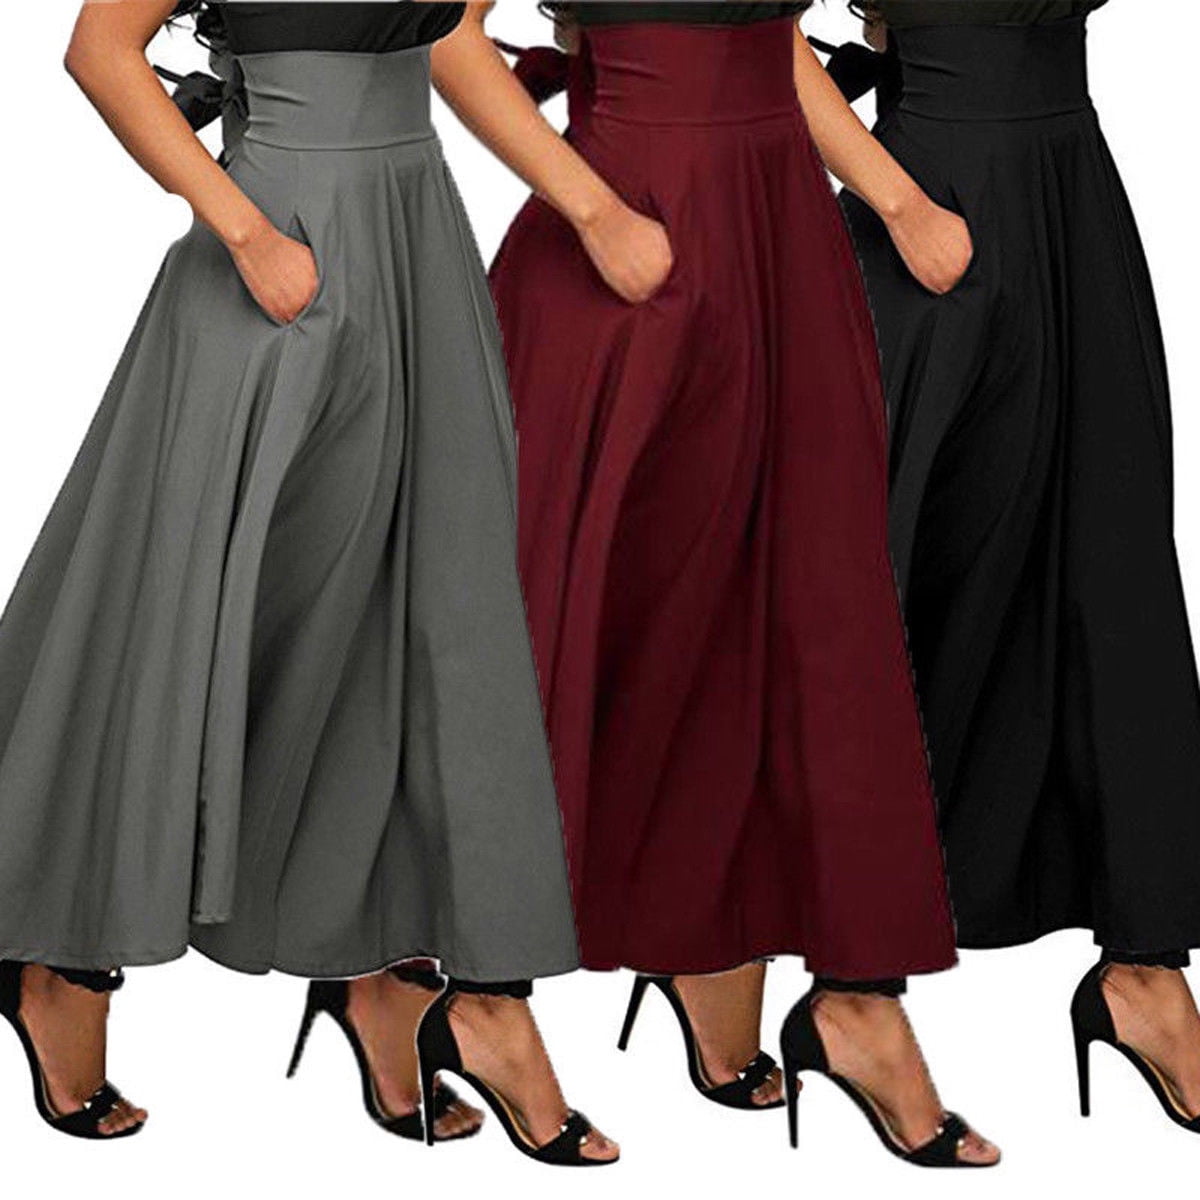 Bagilaanoe High Waist Pleated Long Skirts Women Flared Full Maxi Skirt Swing Dress 81ac3a34 2991 4b87 B07c 3690e9e4ca84 1.e1617331dc323b168721753e601bf18c 